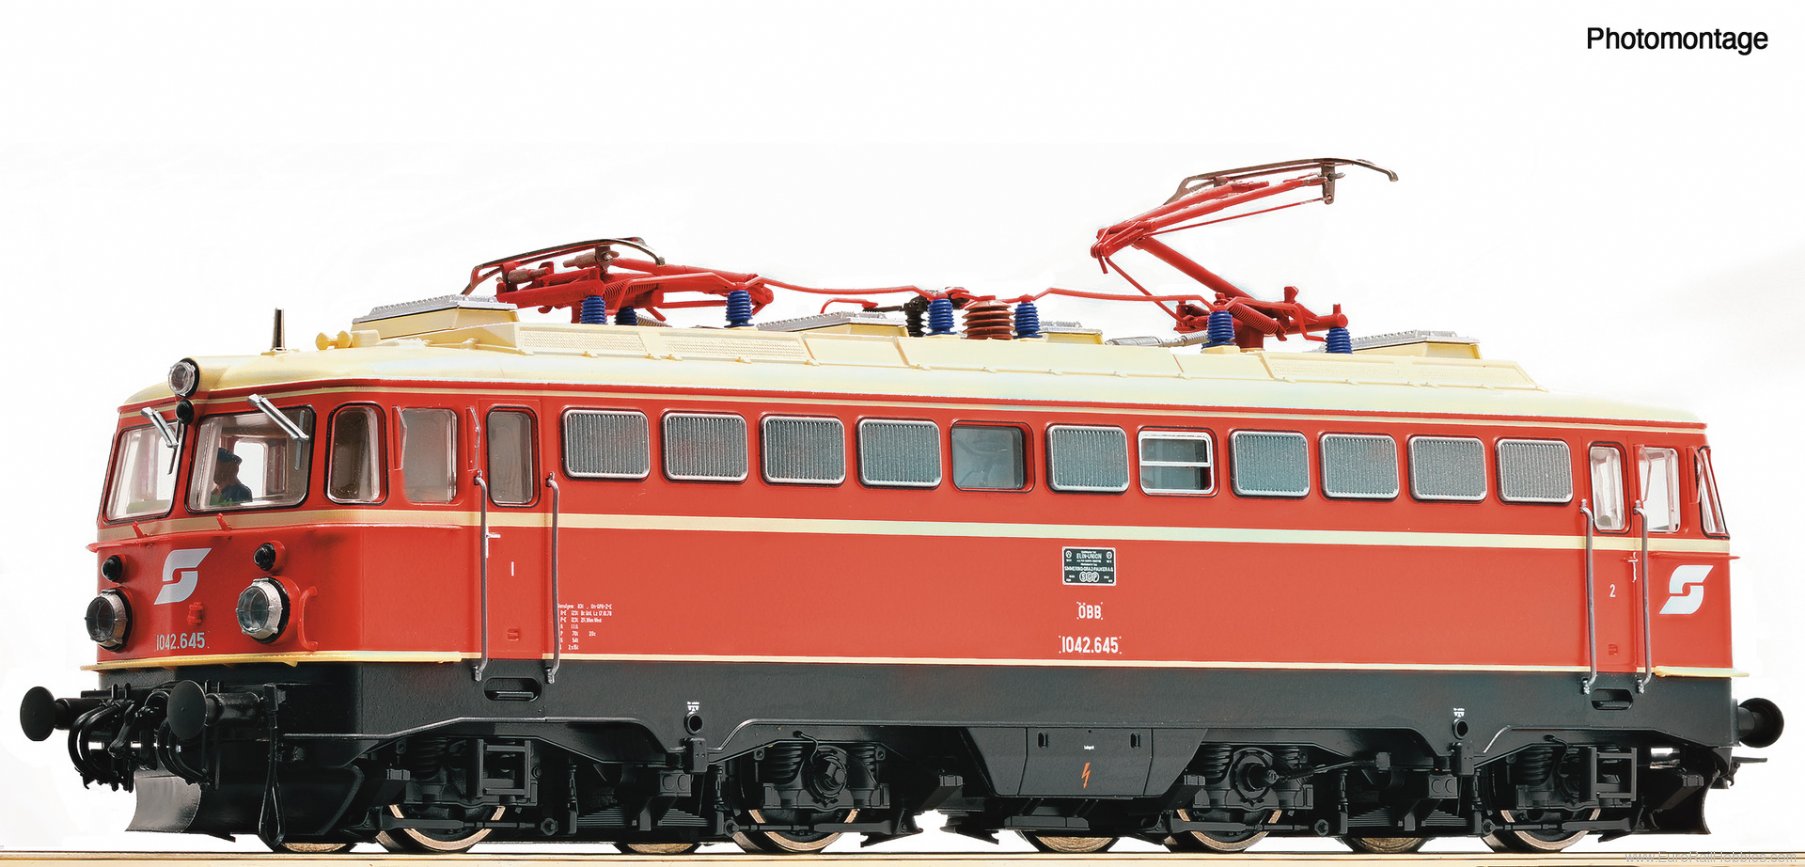 Roco 7520023 Electric locomotive 1042.645, ÃBB (Marklin